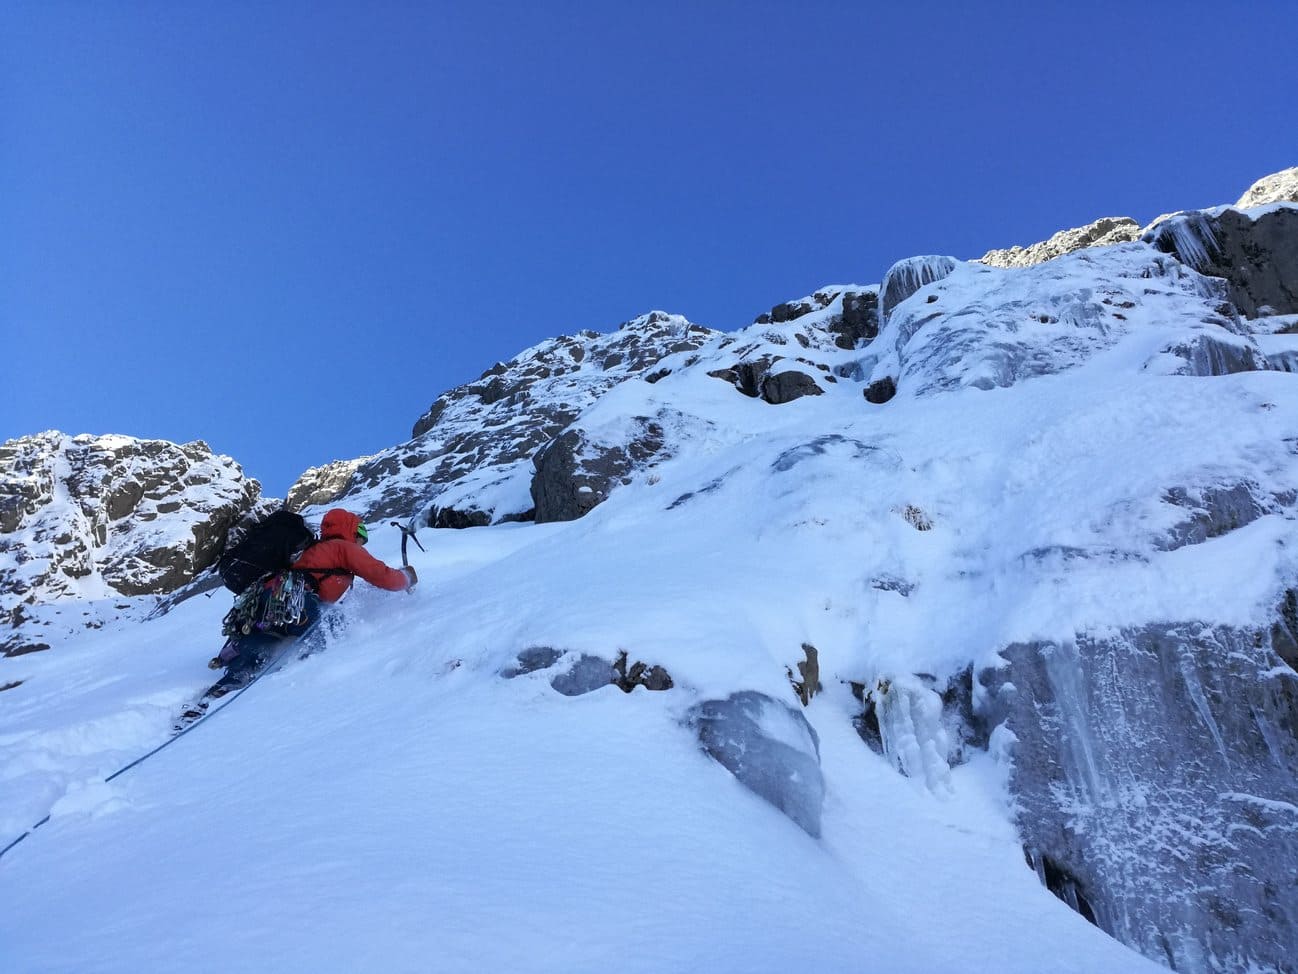 Fighting through deep steep snow on the ramp